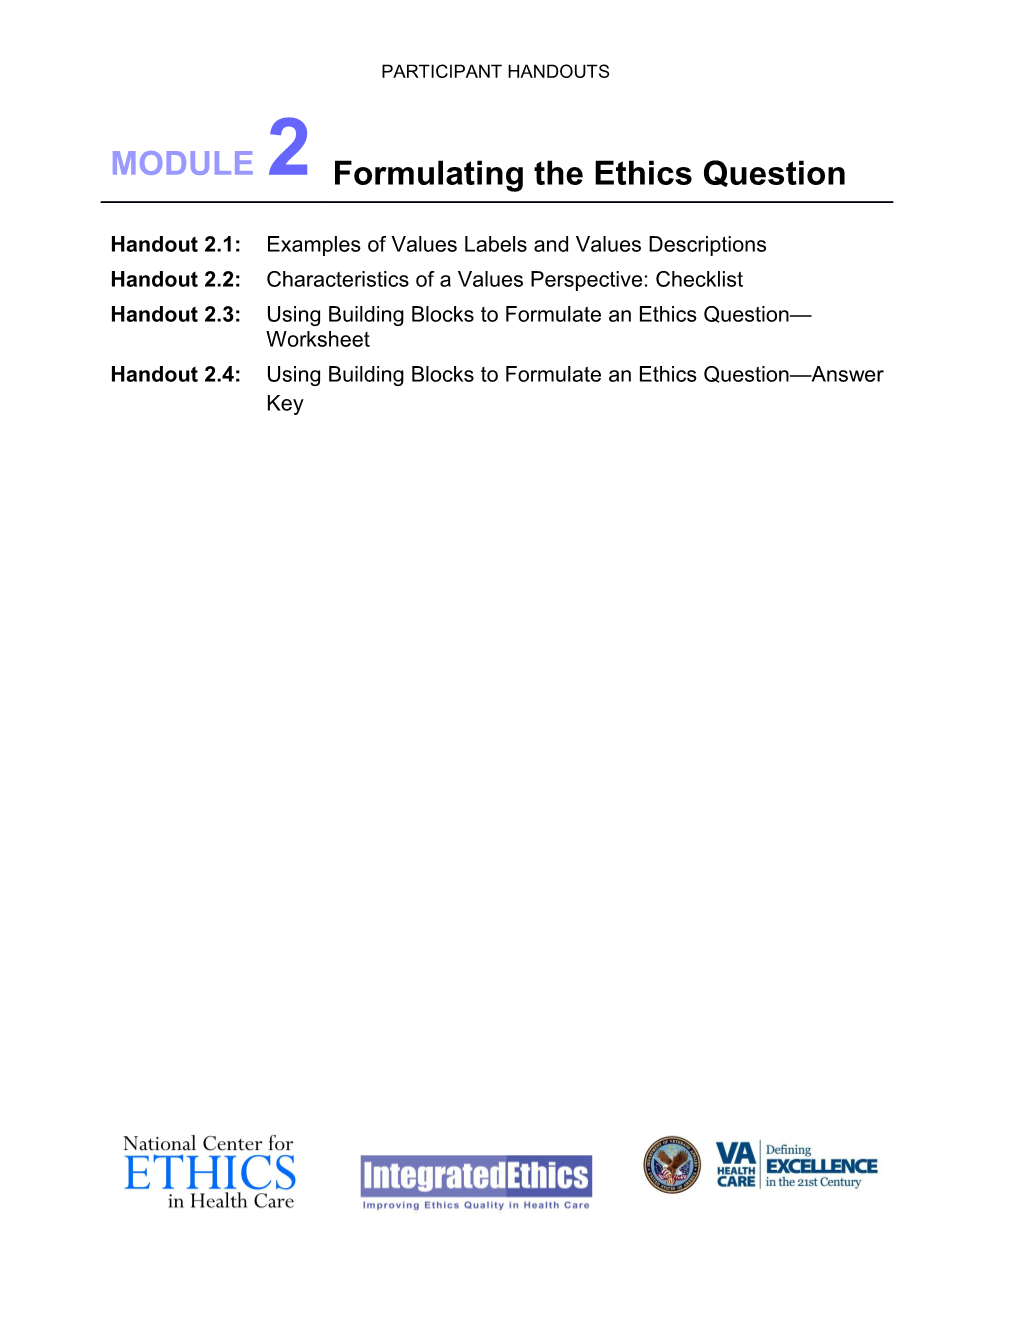 Integratedethics Ethics Consultation Beyond the Basics Module 2 - Handouts - US Department s1